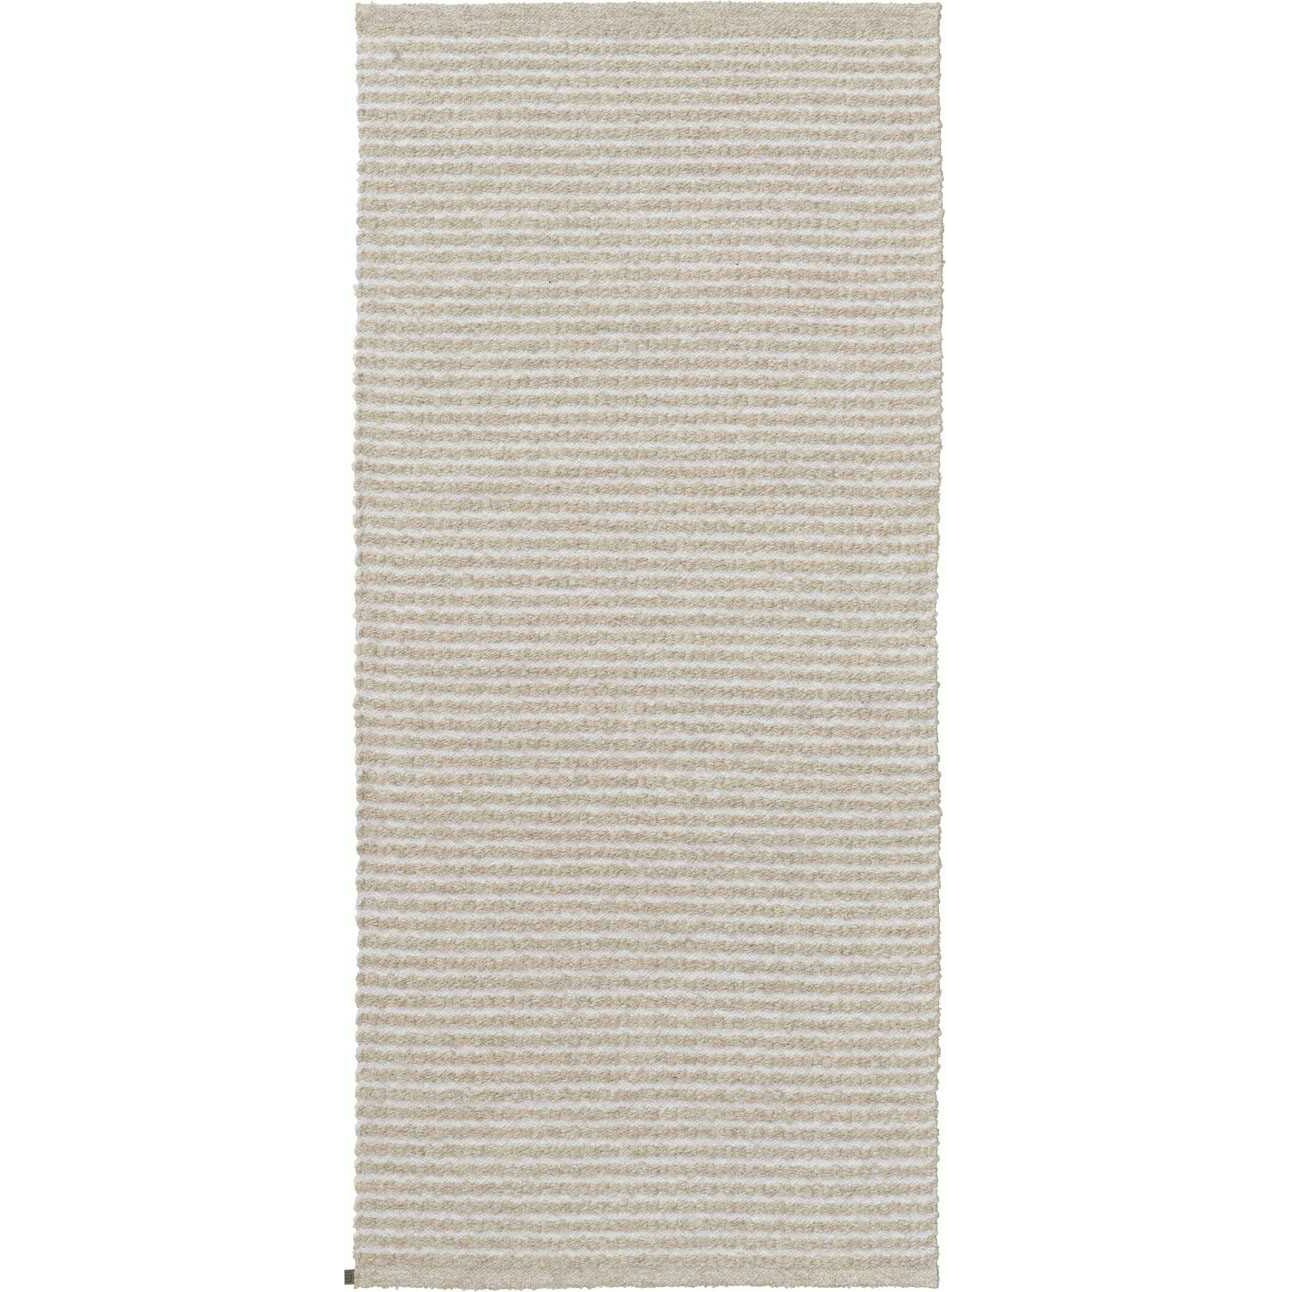 Cotton Vera Rug 200x300 cm, Sand